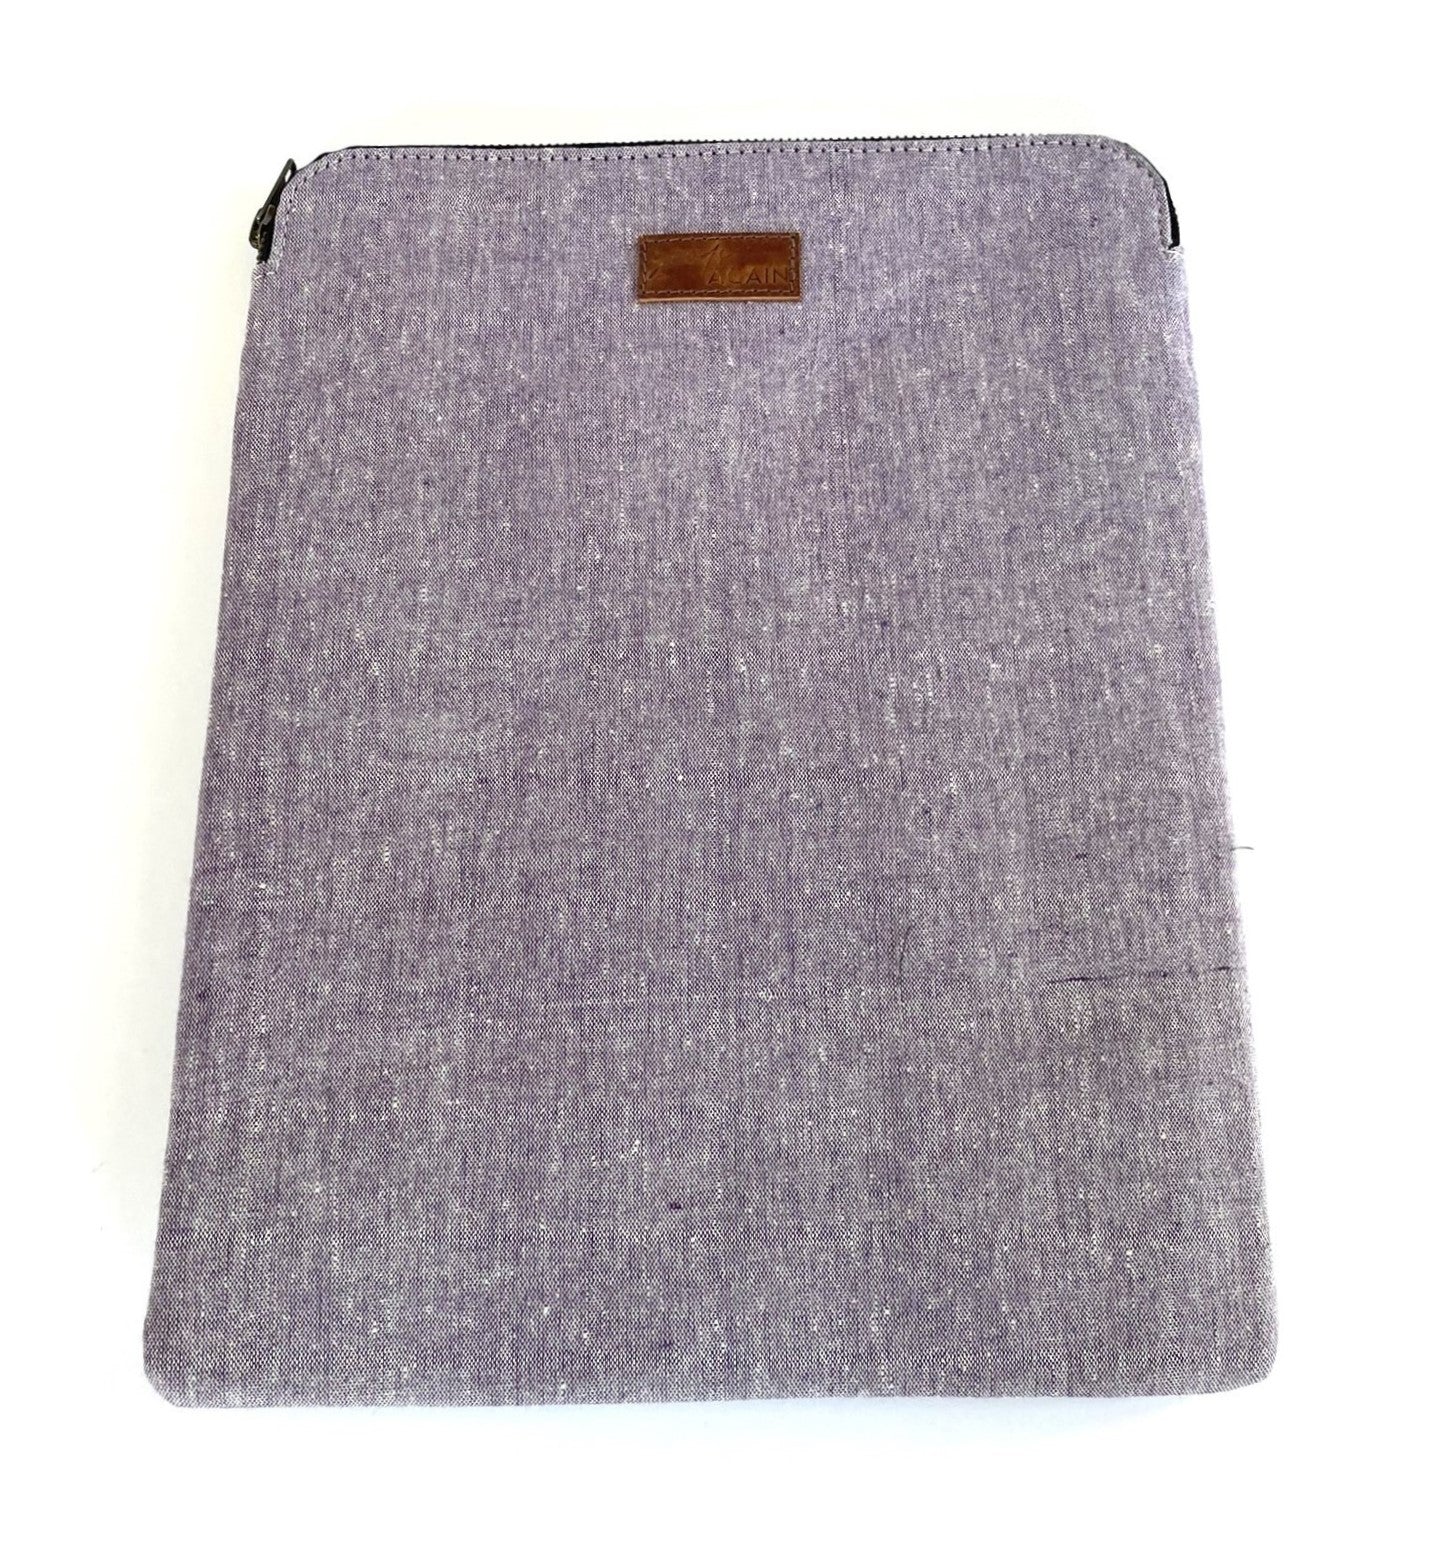 Fabric Laptop Sleeve